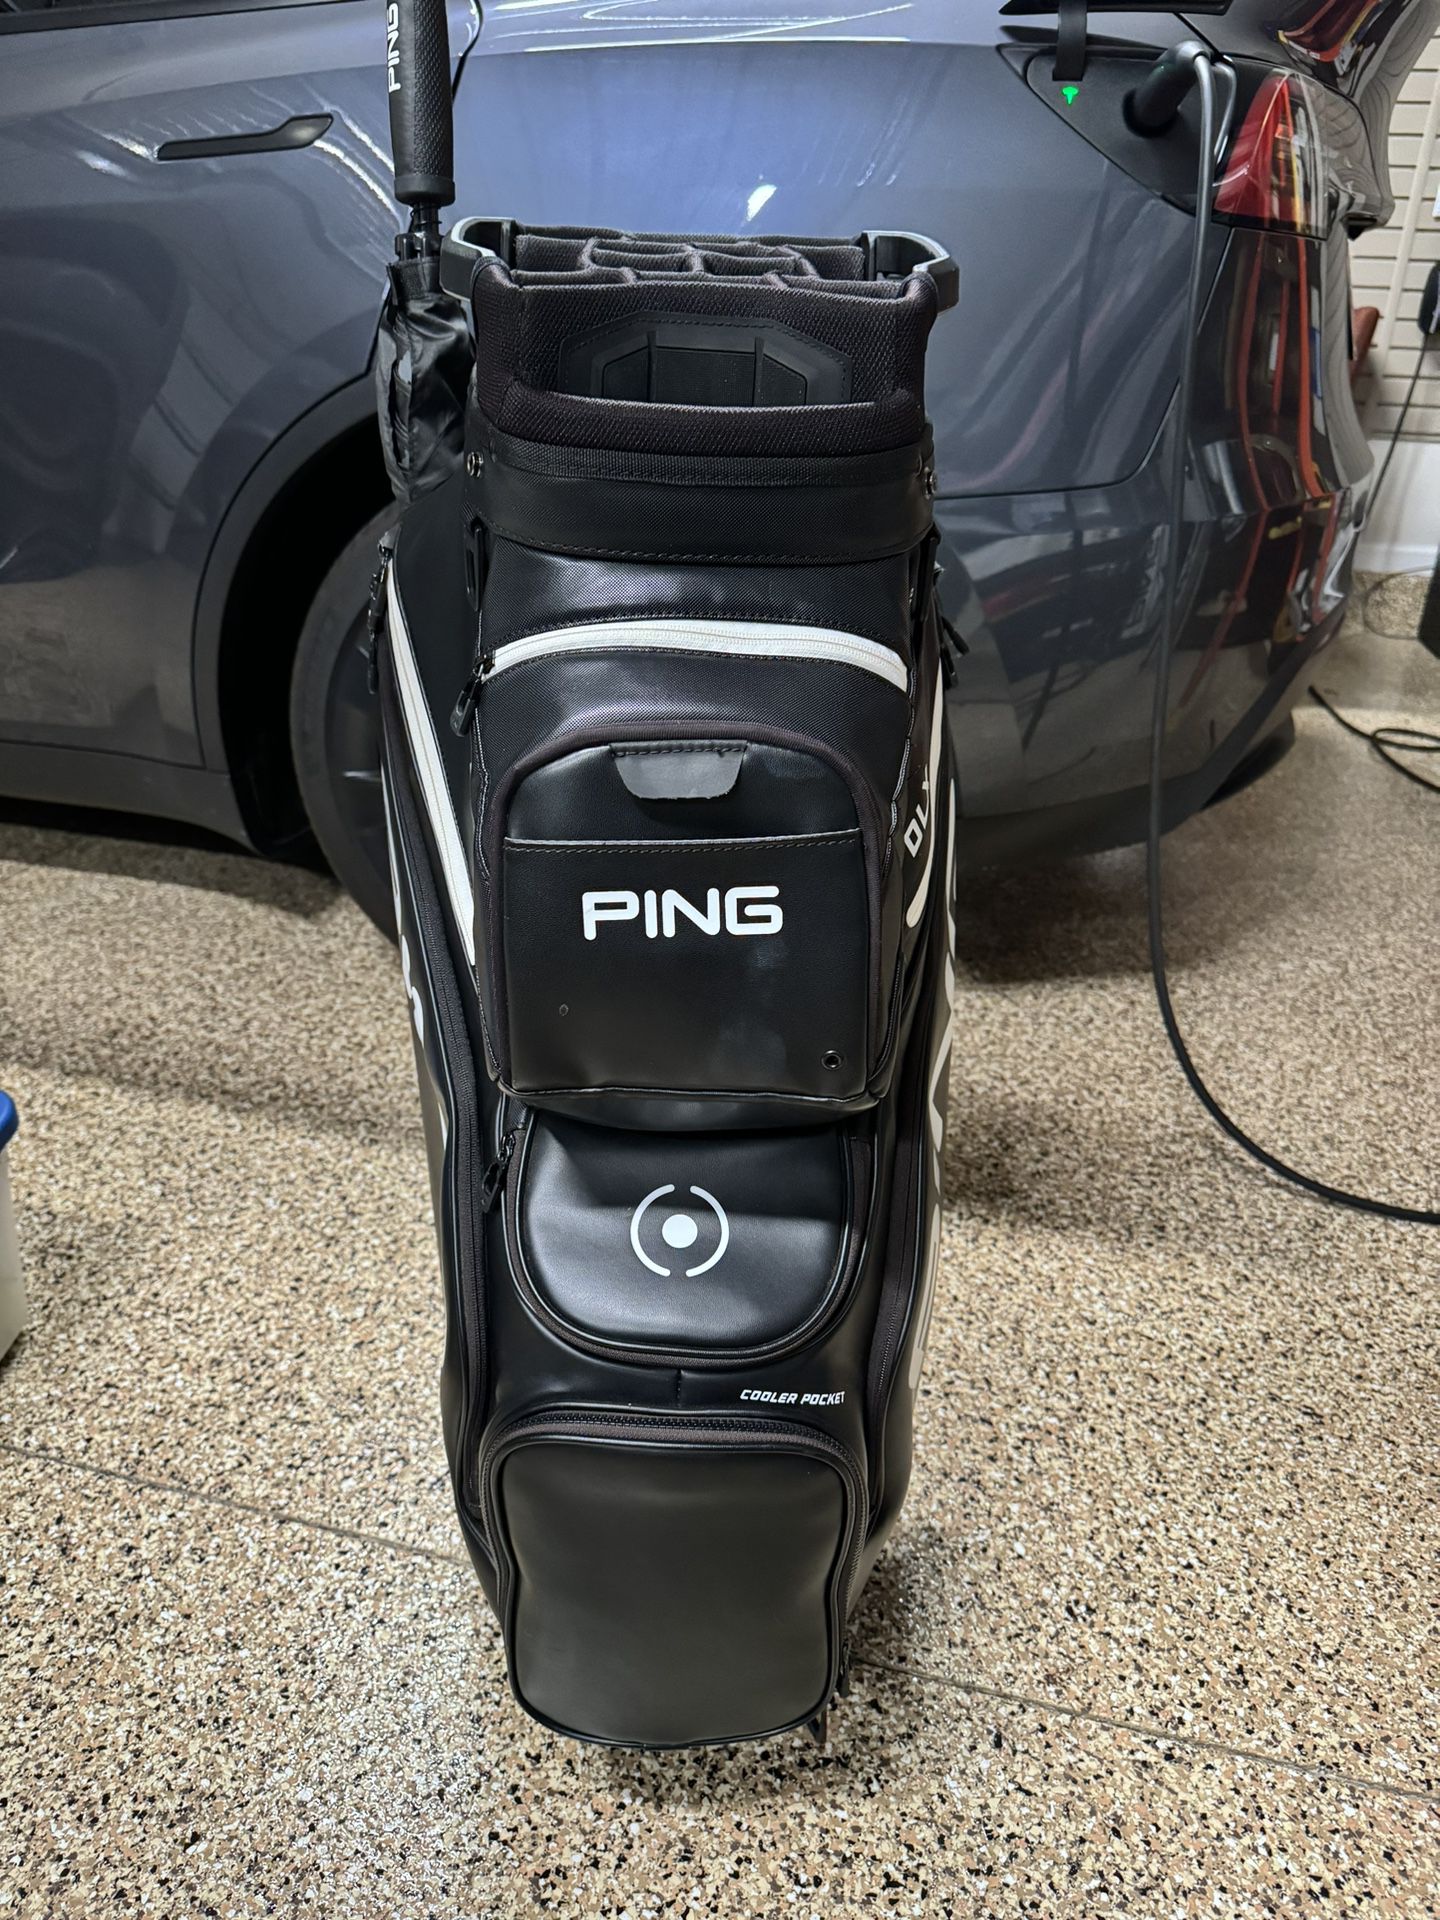 Ping DLX Golf Cart Bag